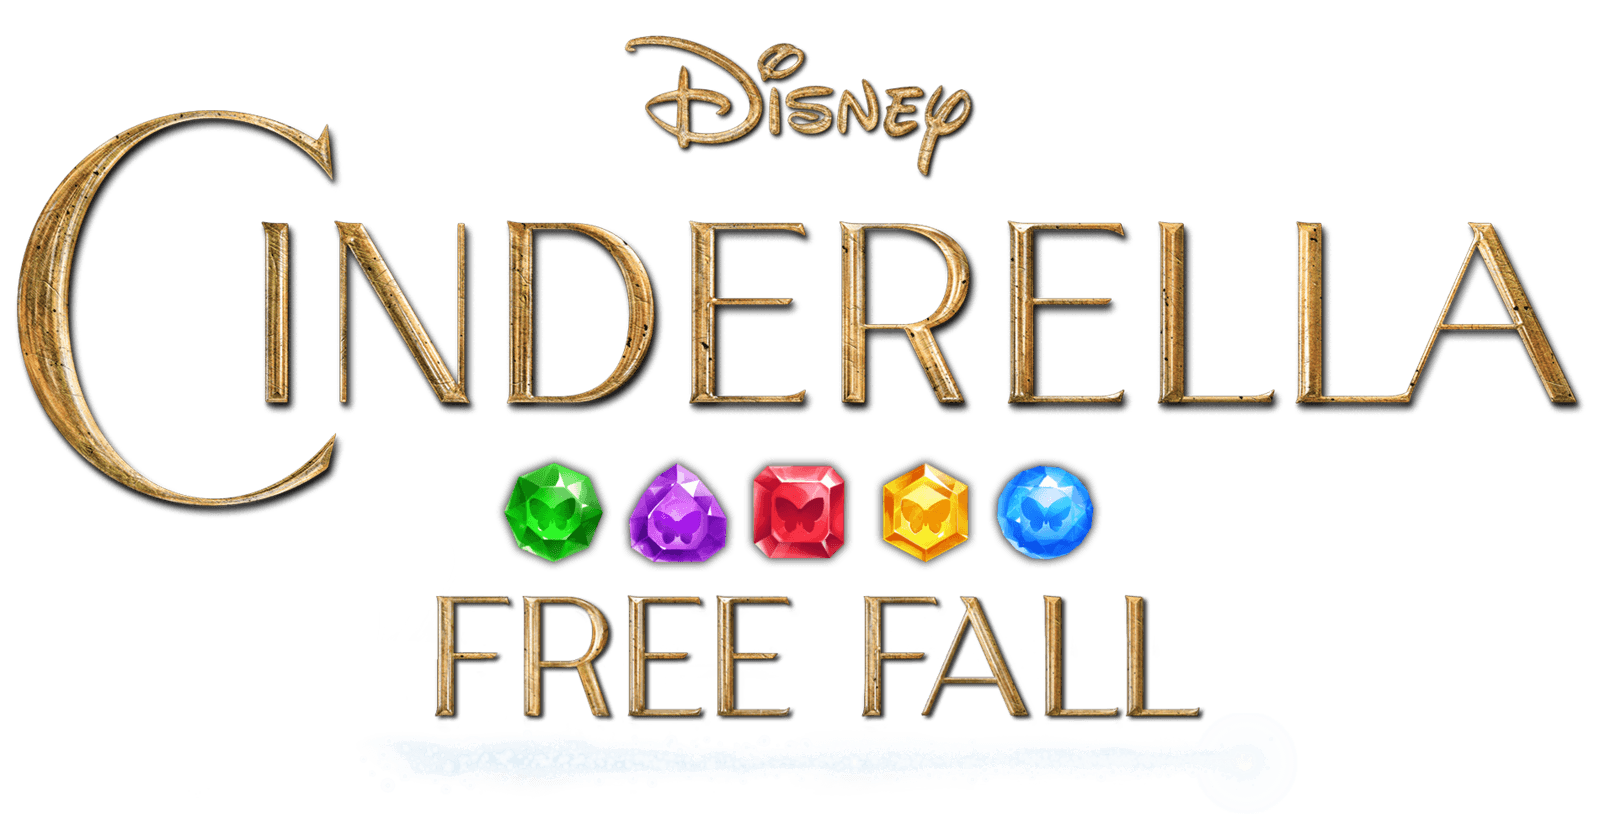 Cinderella Logo - Cinderella logo png 1 PNG Image